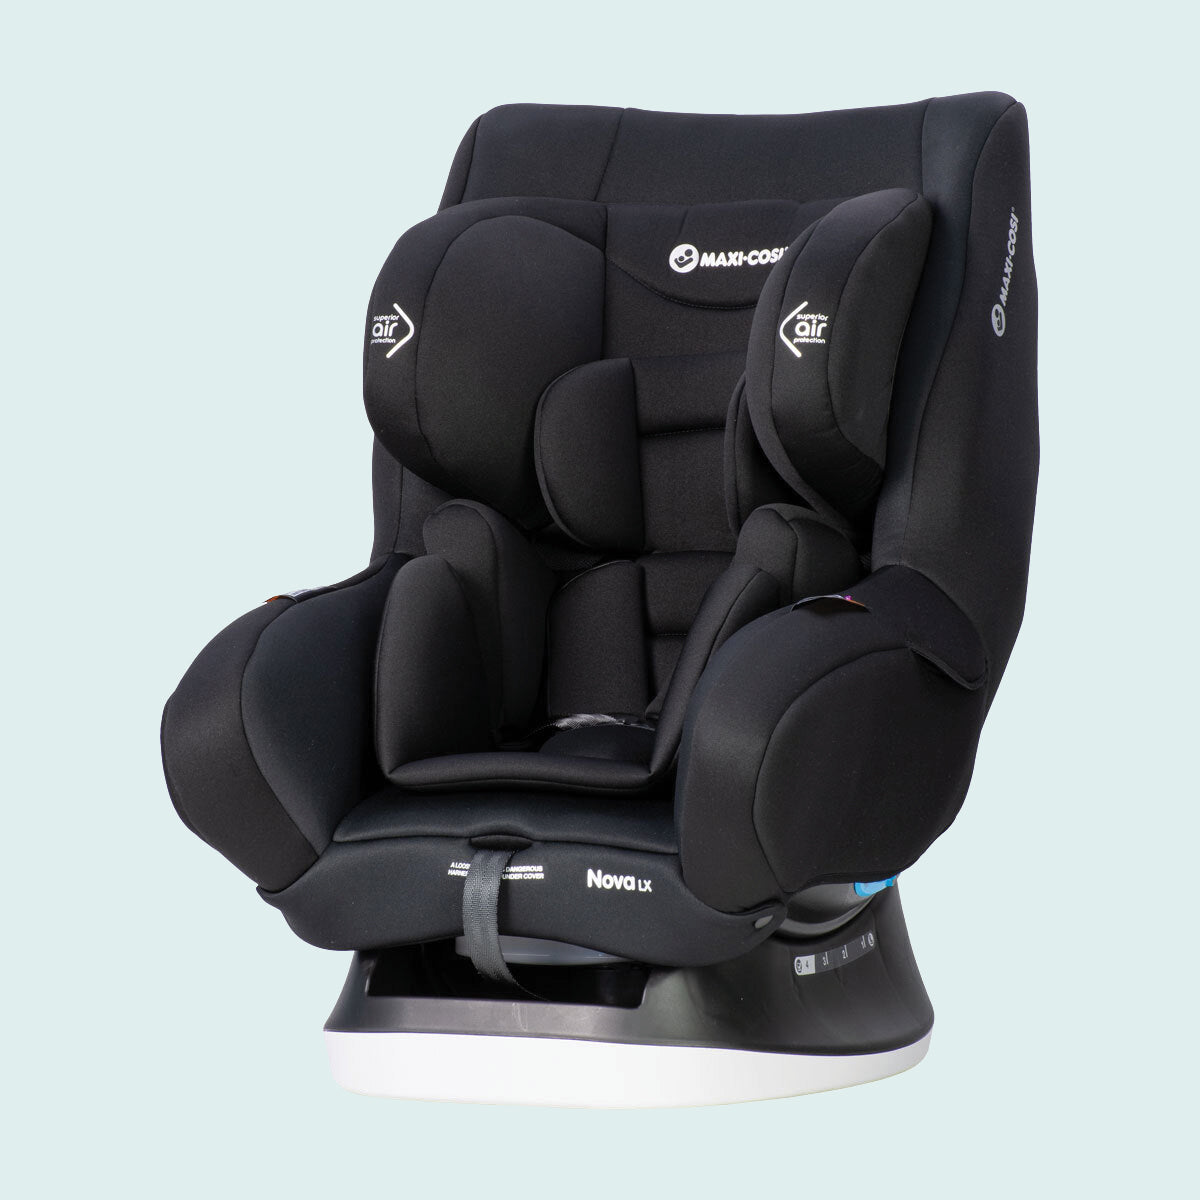 Maxi-Cosi Nova LX Convertible Car Seat